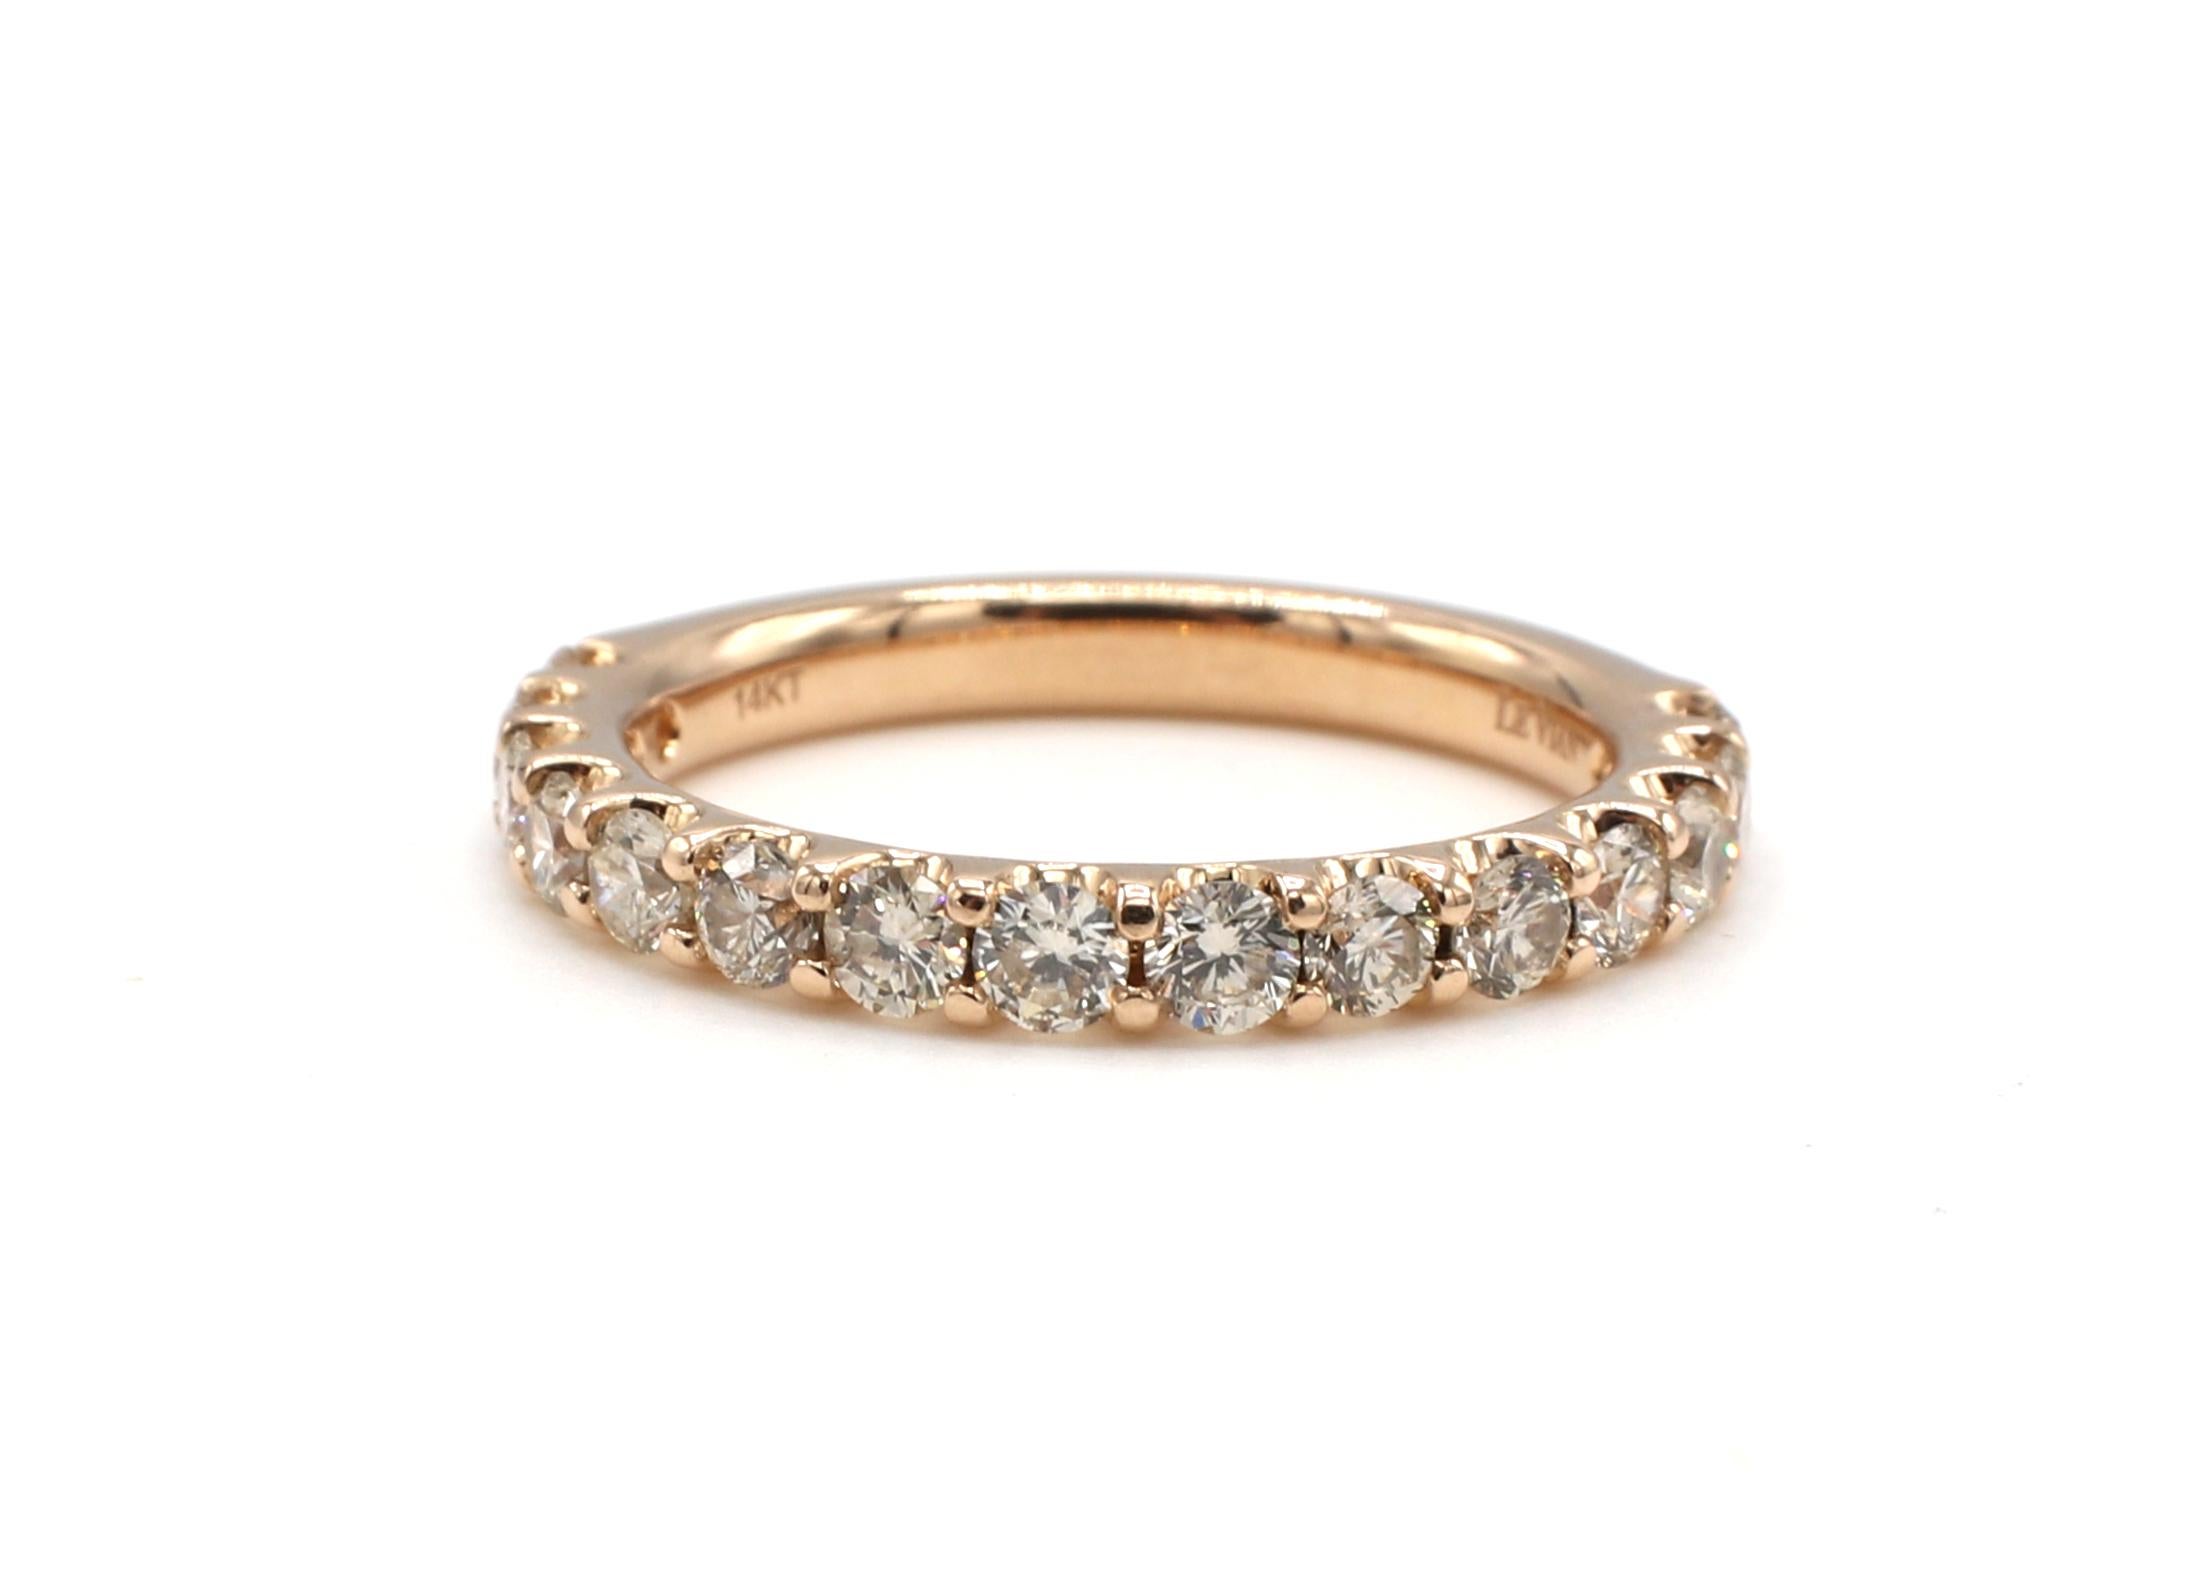 Le Vian Rose Gold 1.00 Carat Strawberry & Nude™ Diamond Wedding Band Ring
Metal: 14k rose gold 
Weight: 3.17 grams
Diamonds: Approx. 1 CTW 